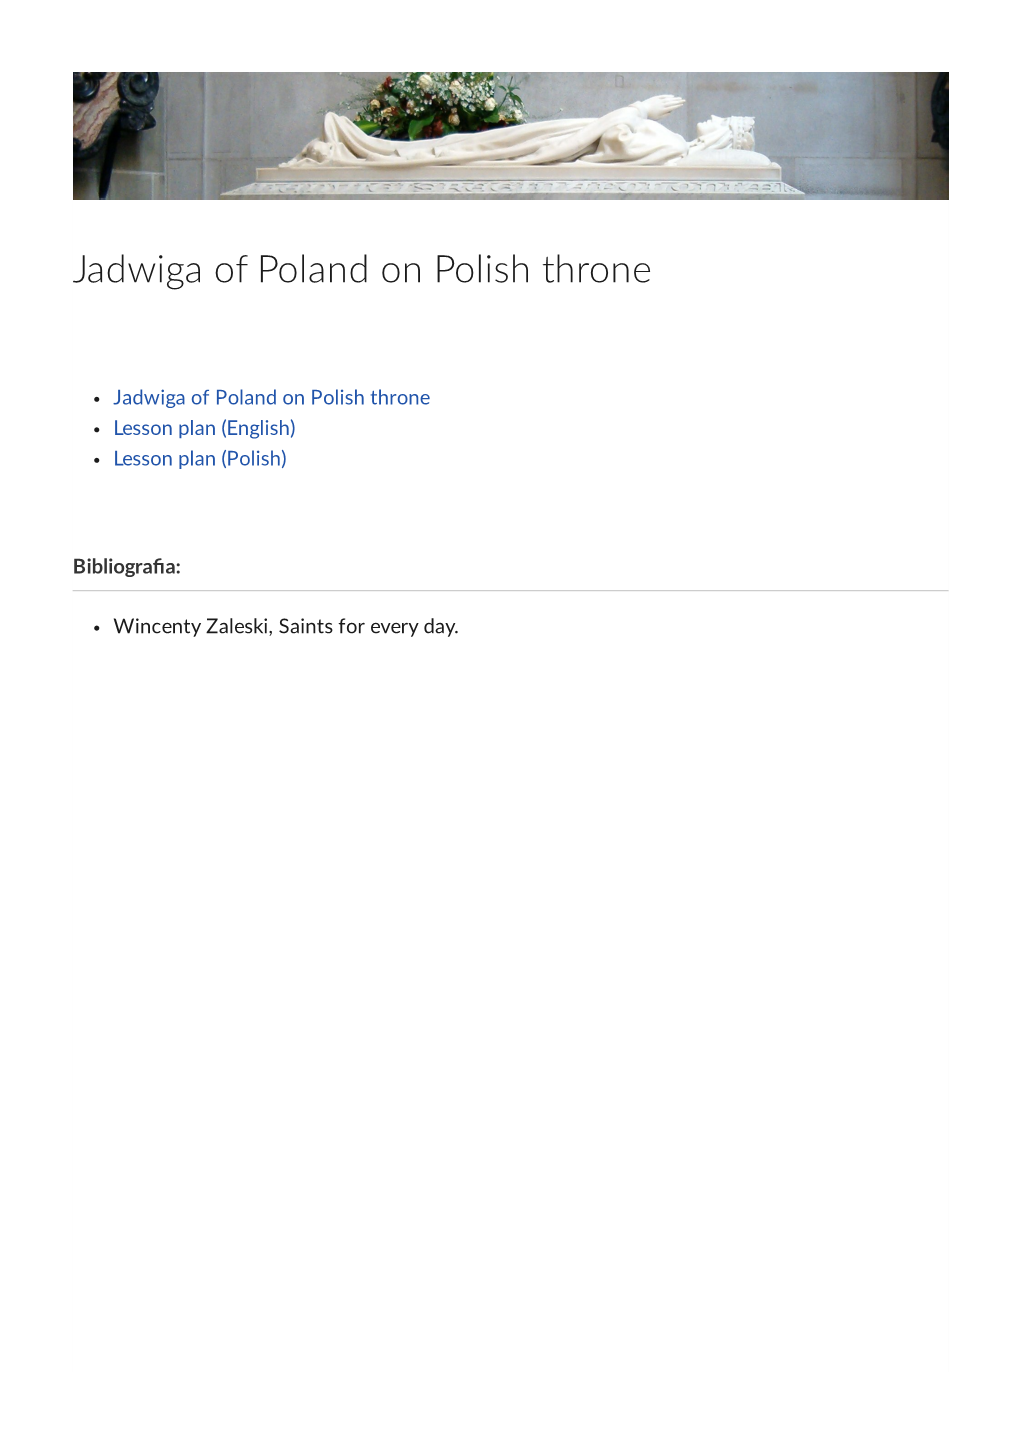 Jadwiga of Poland on Polish Throne